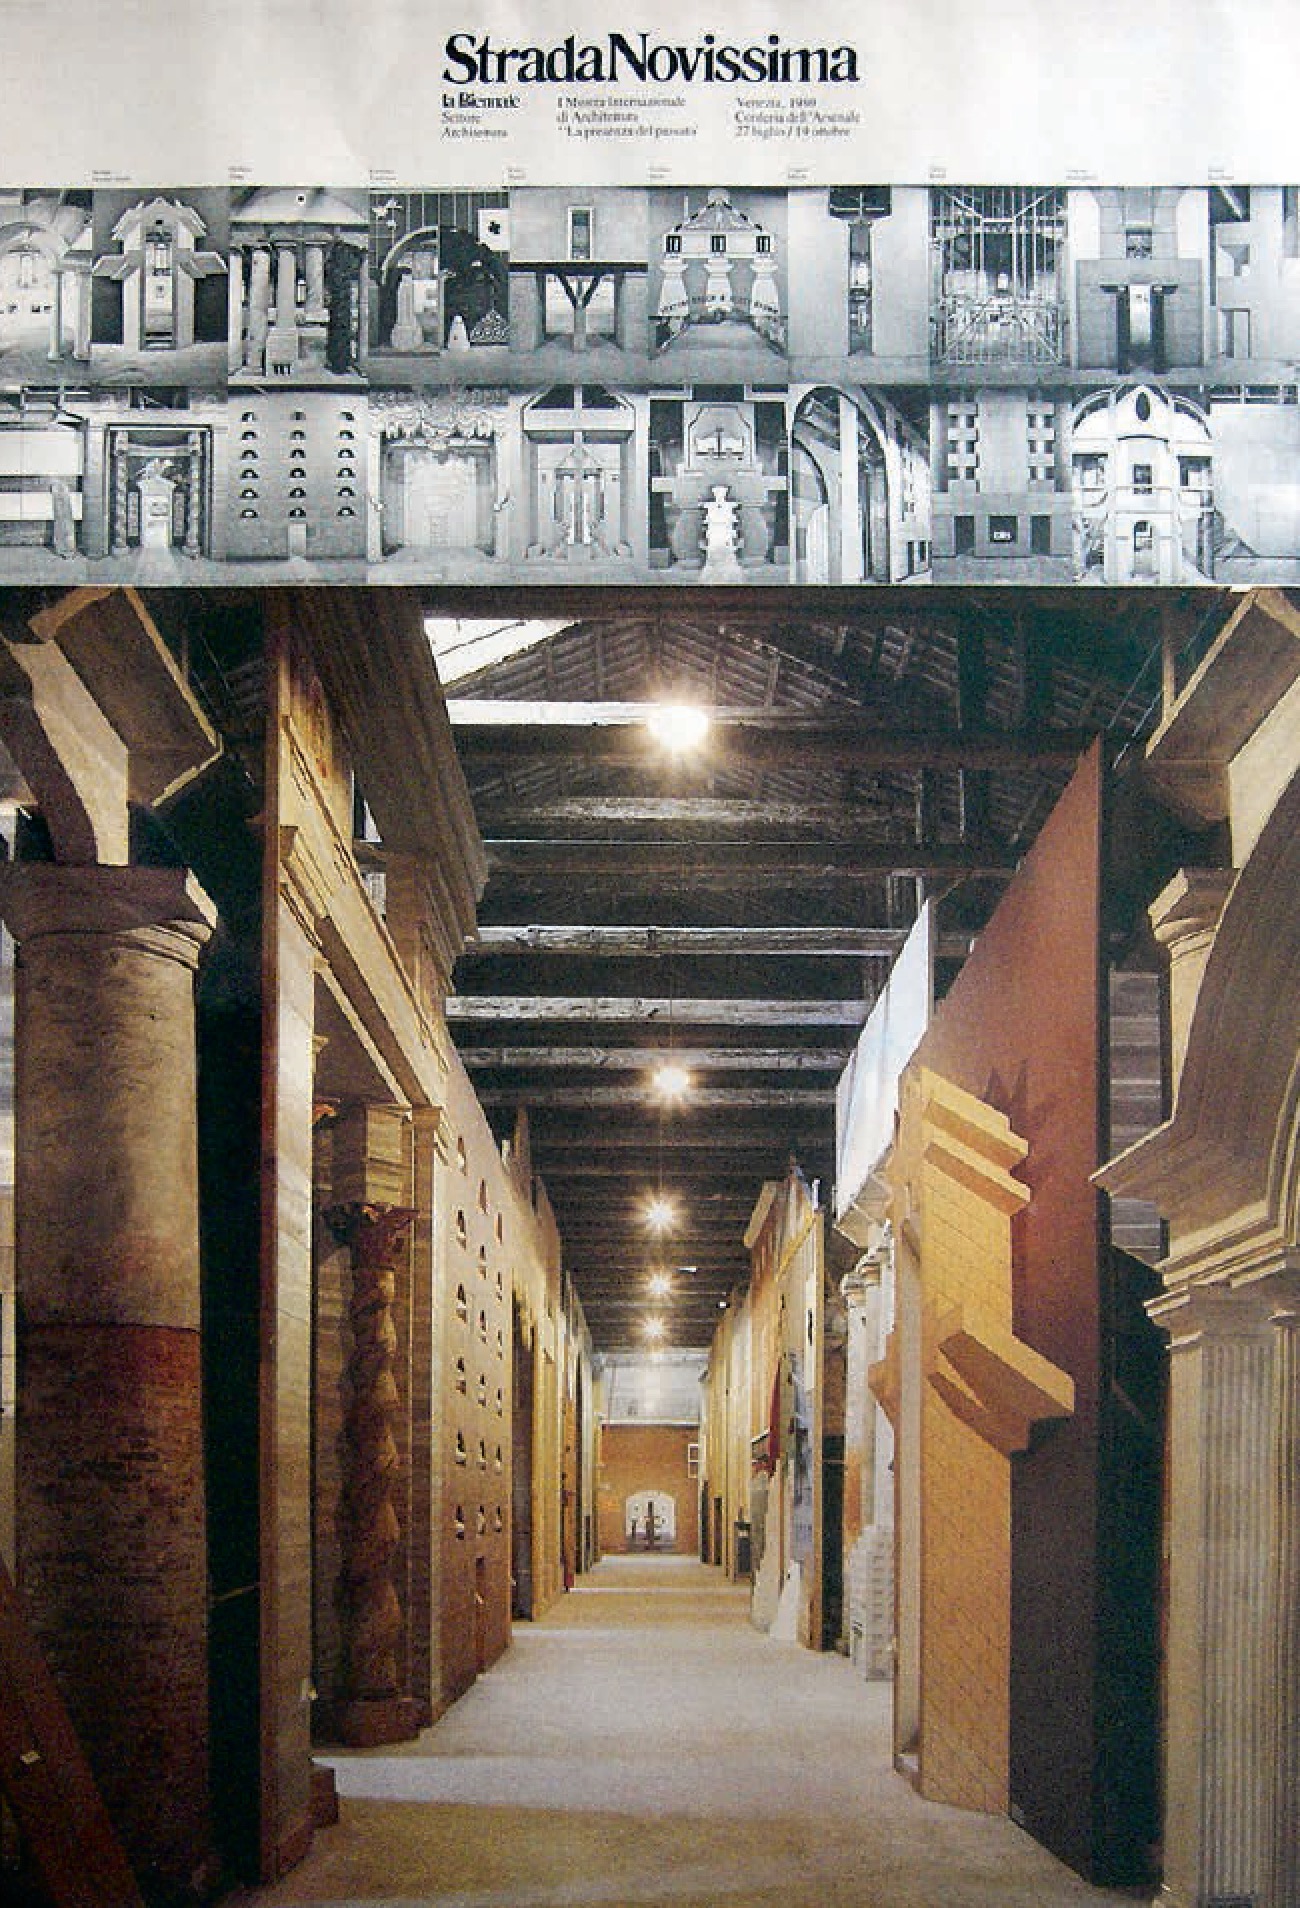 Poster featuring the Strada Novissima installation at La Presenza del Passato (The Presence of the Past) exhibition at the 1980 Venice Architecture Biennalefrom Exhibit A Exhibitions That Transformed Architecture 1948-2000